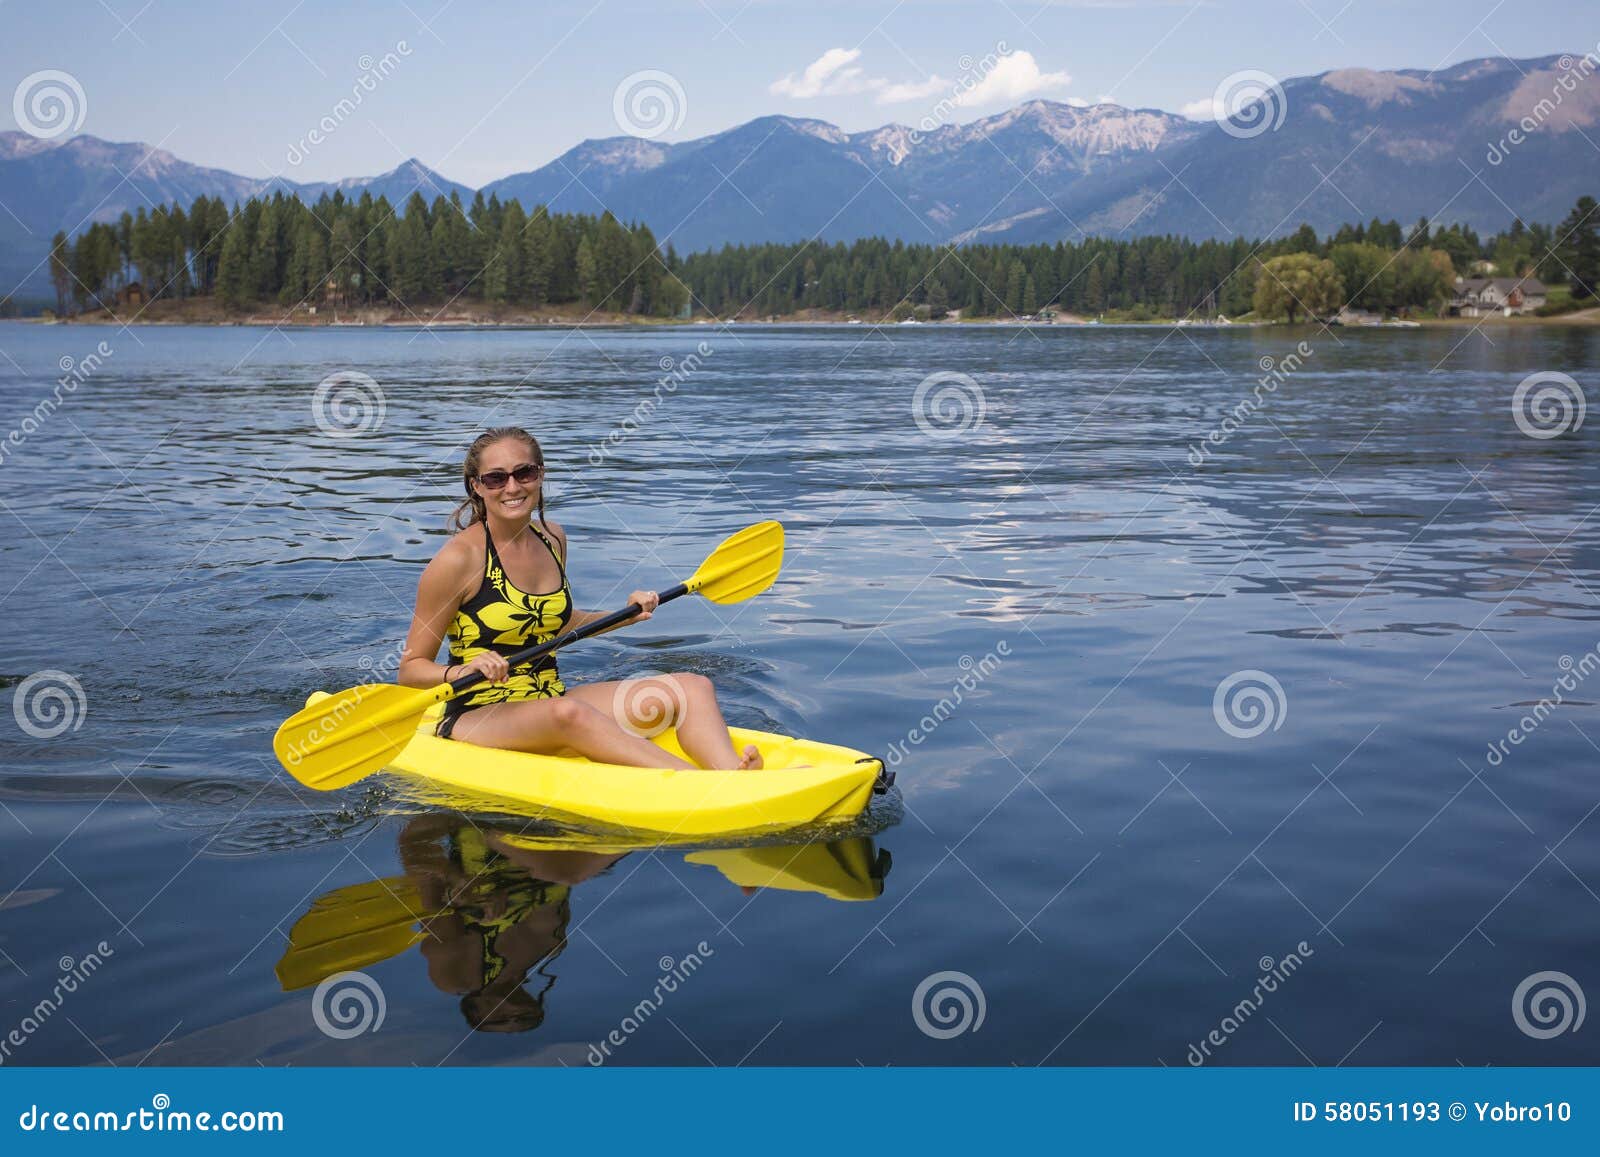 Active, Fit Woman Kayaking On A Beautiful Mountain Lake 